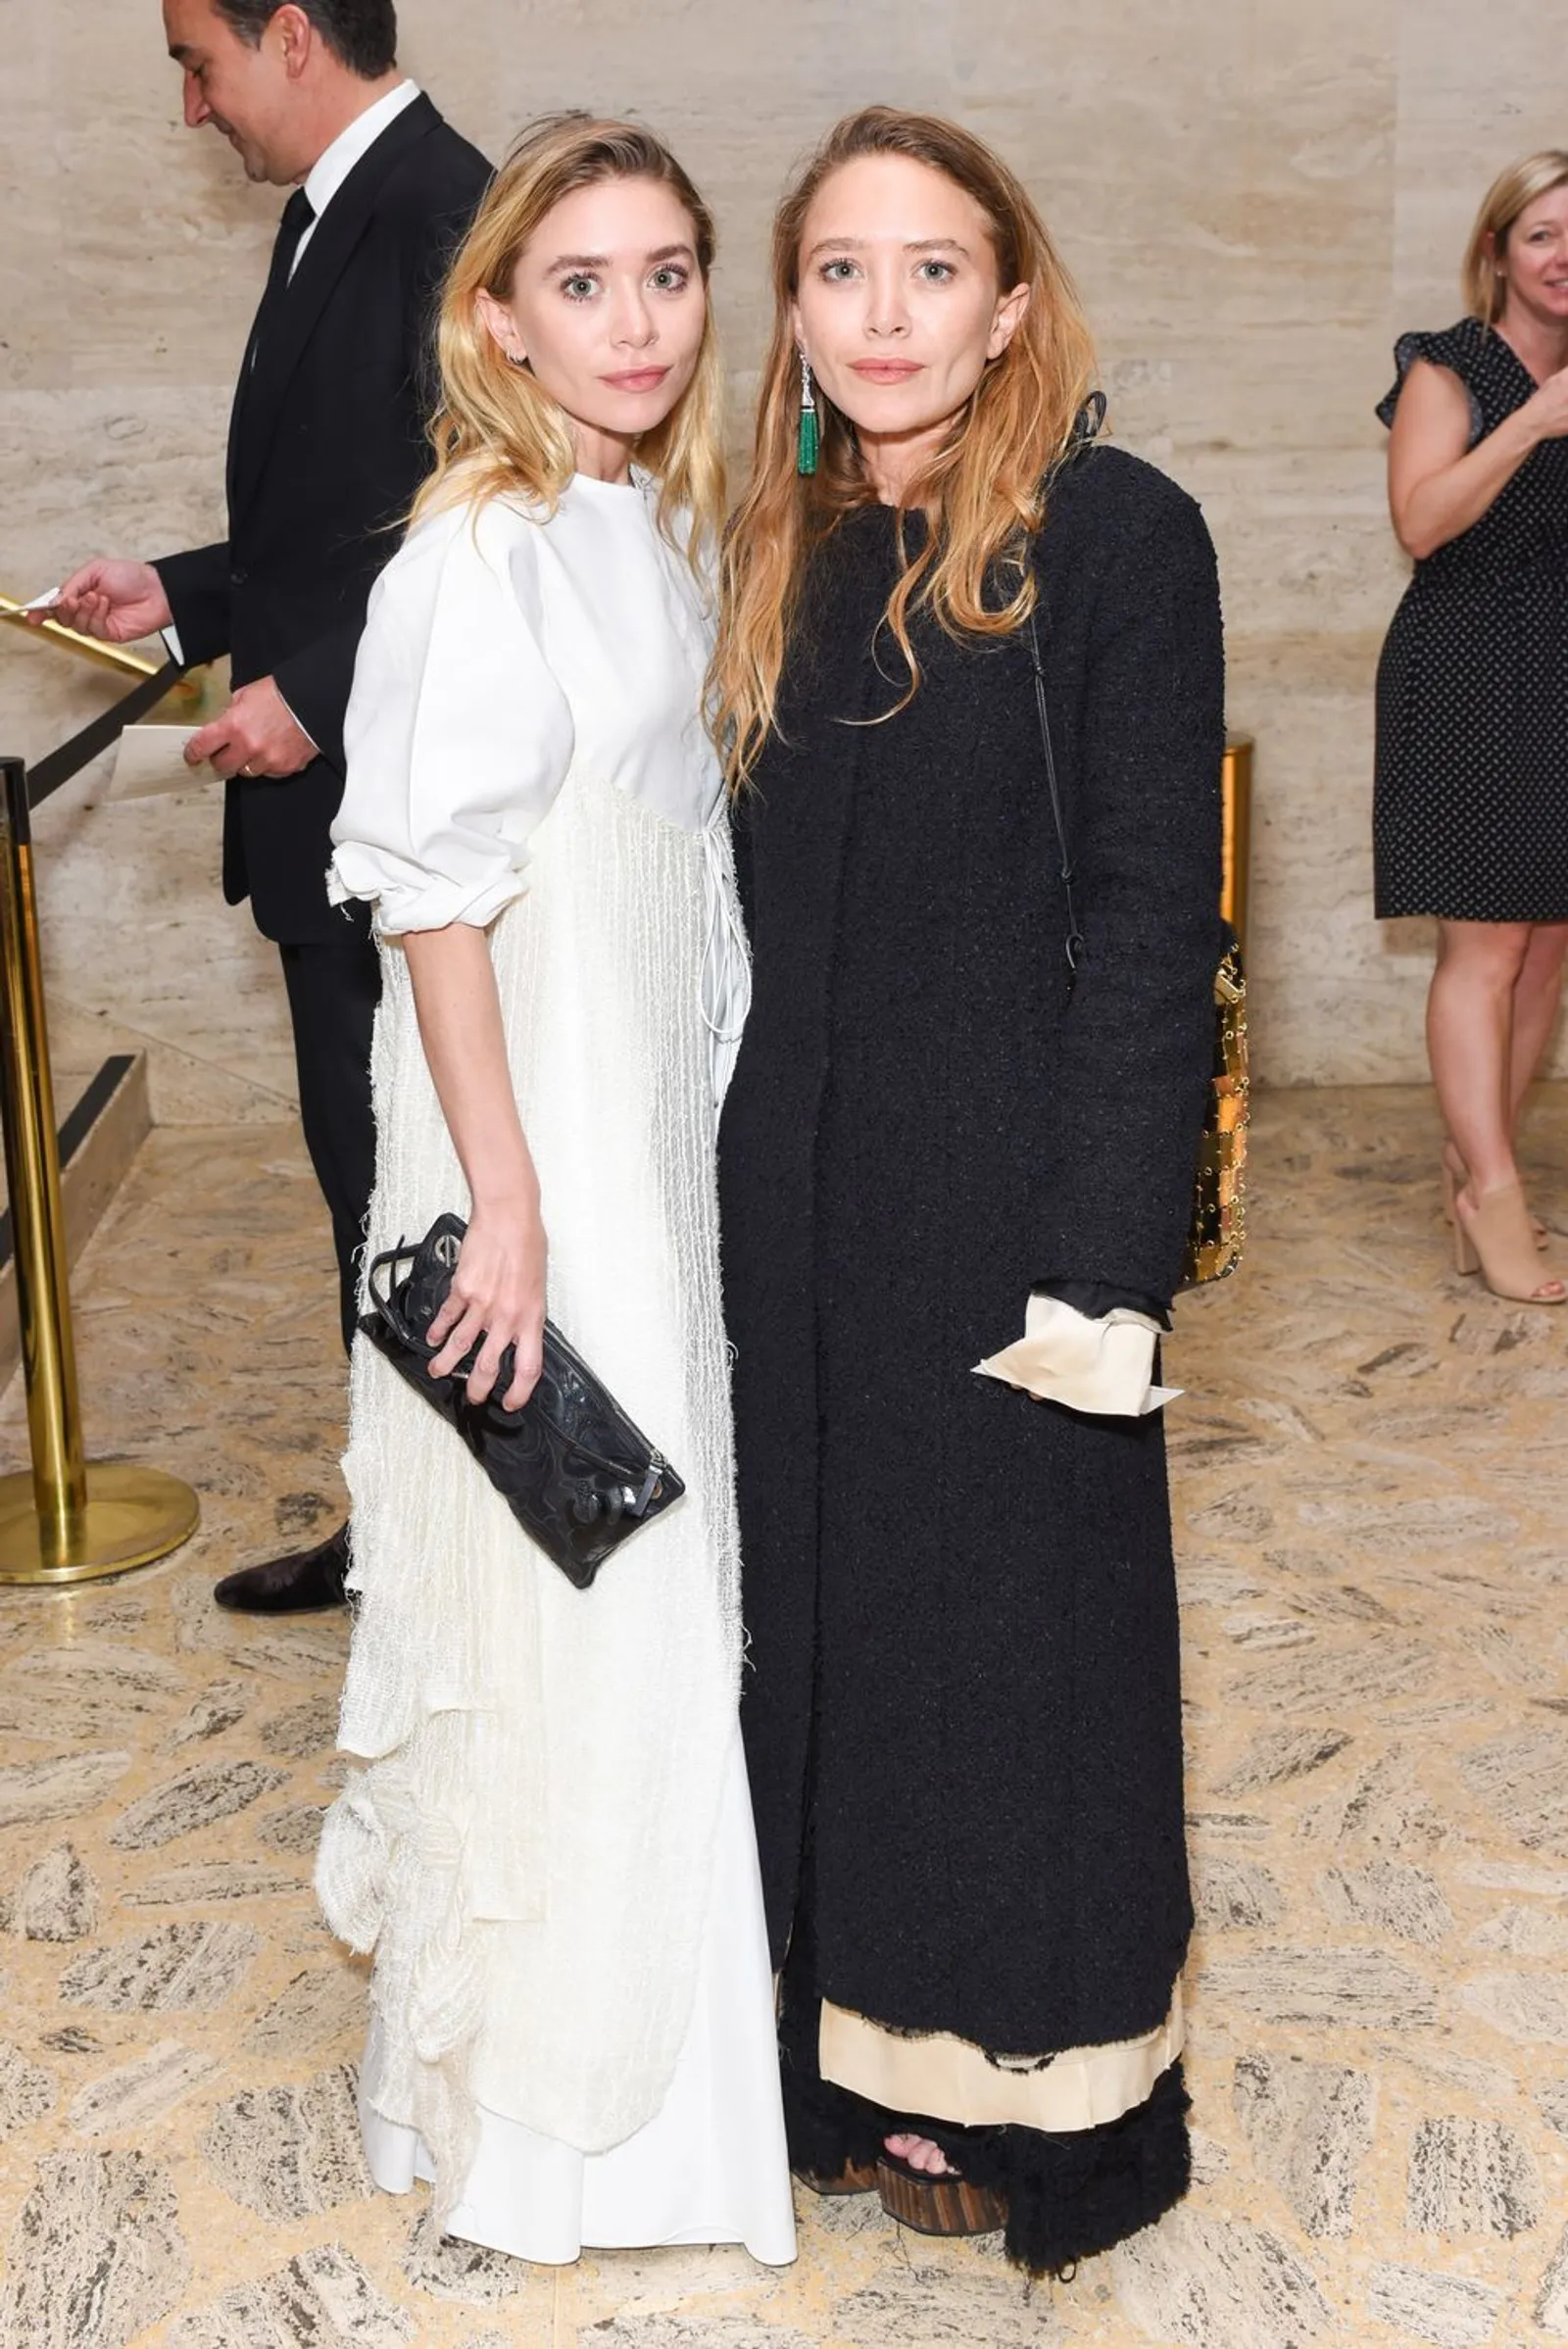 Gaya Effortless Mary-Kate dan Ashley Olsen yang Tetap Stunning!